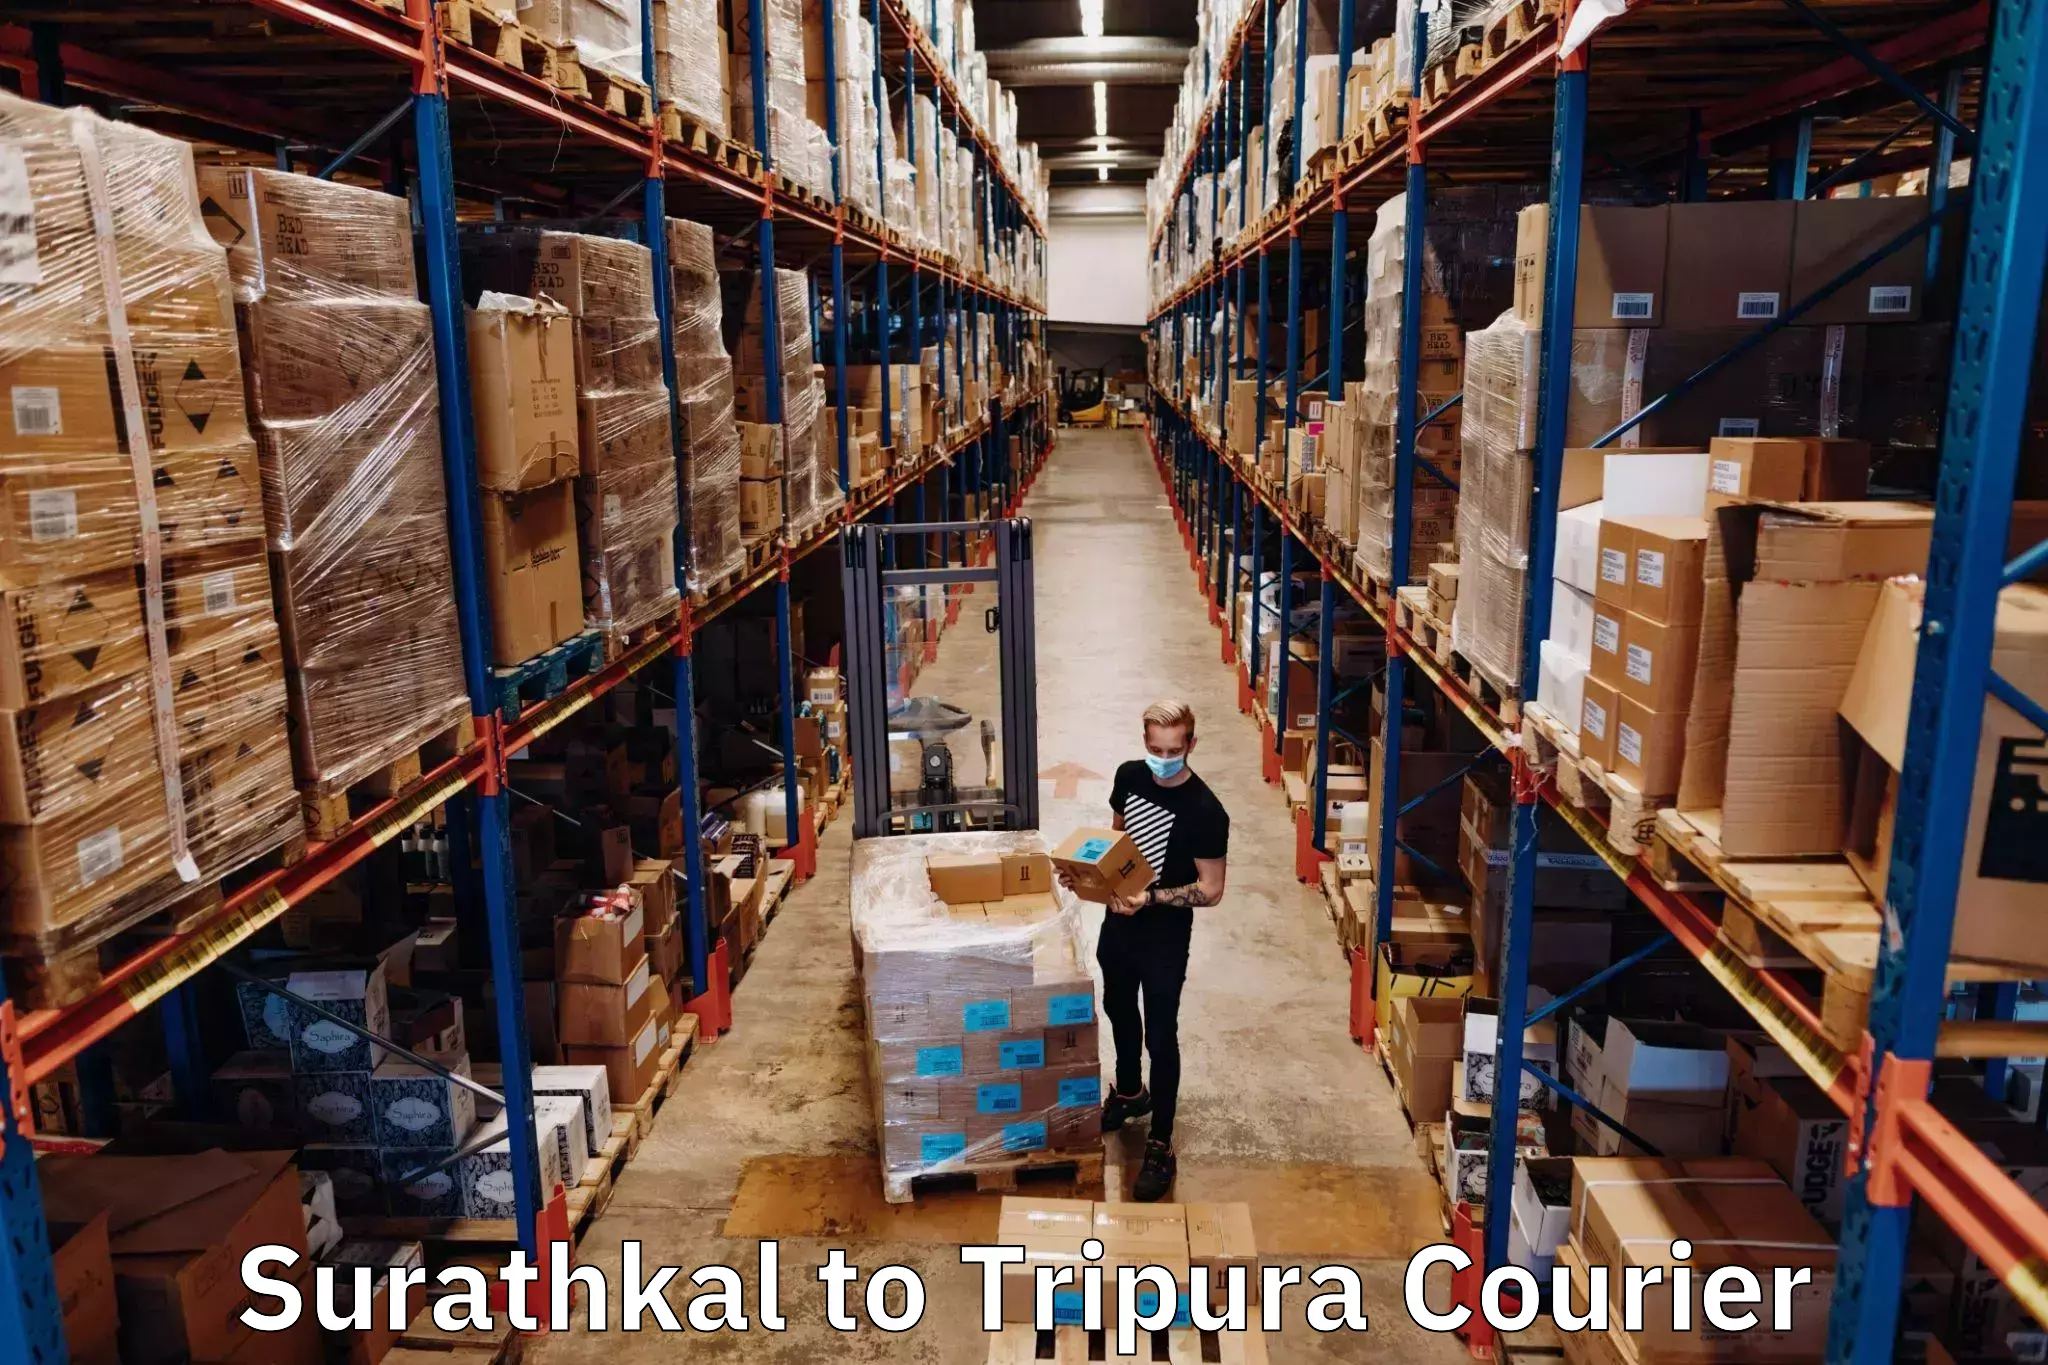 User-friendly courier app Surathkal to Tripura